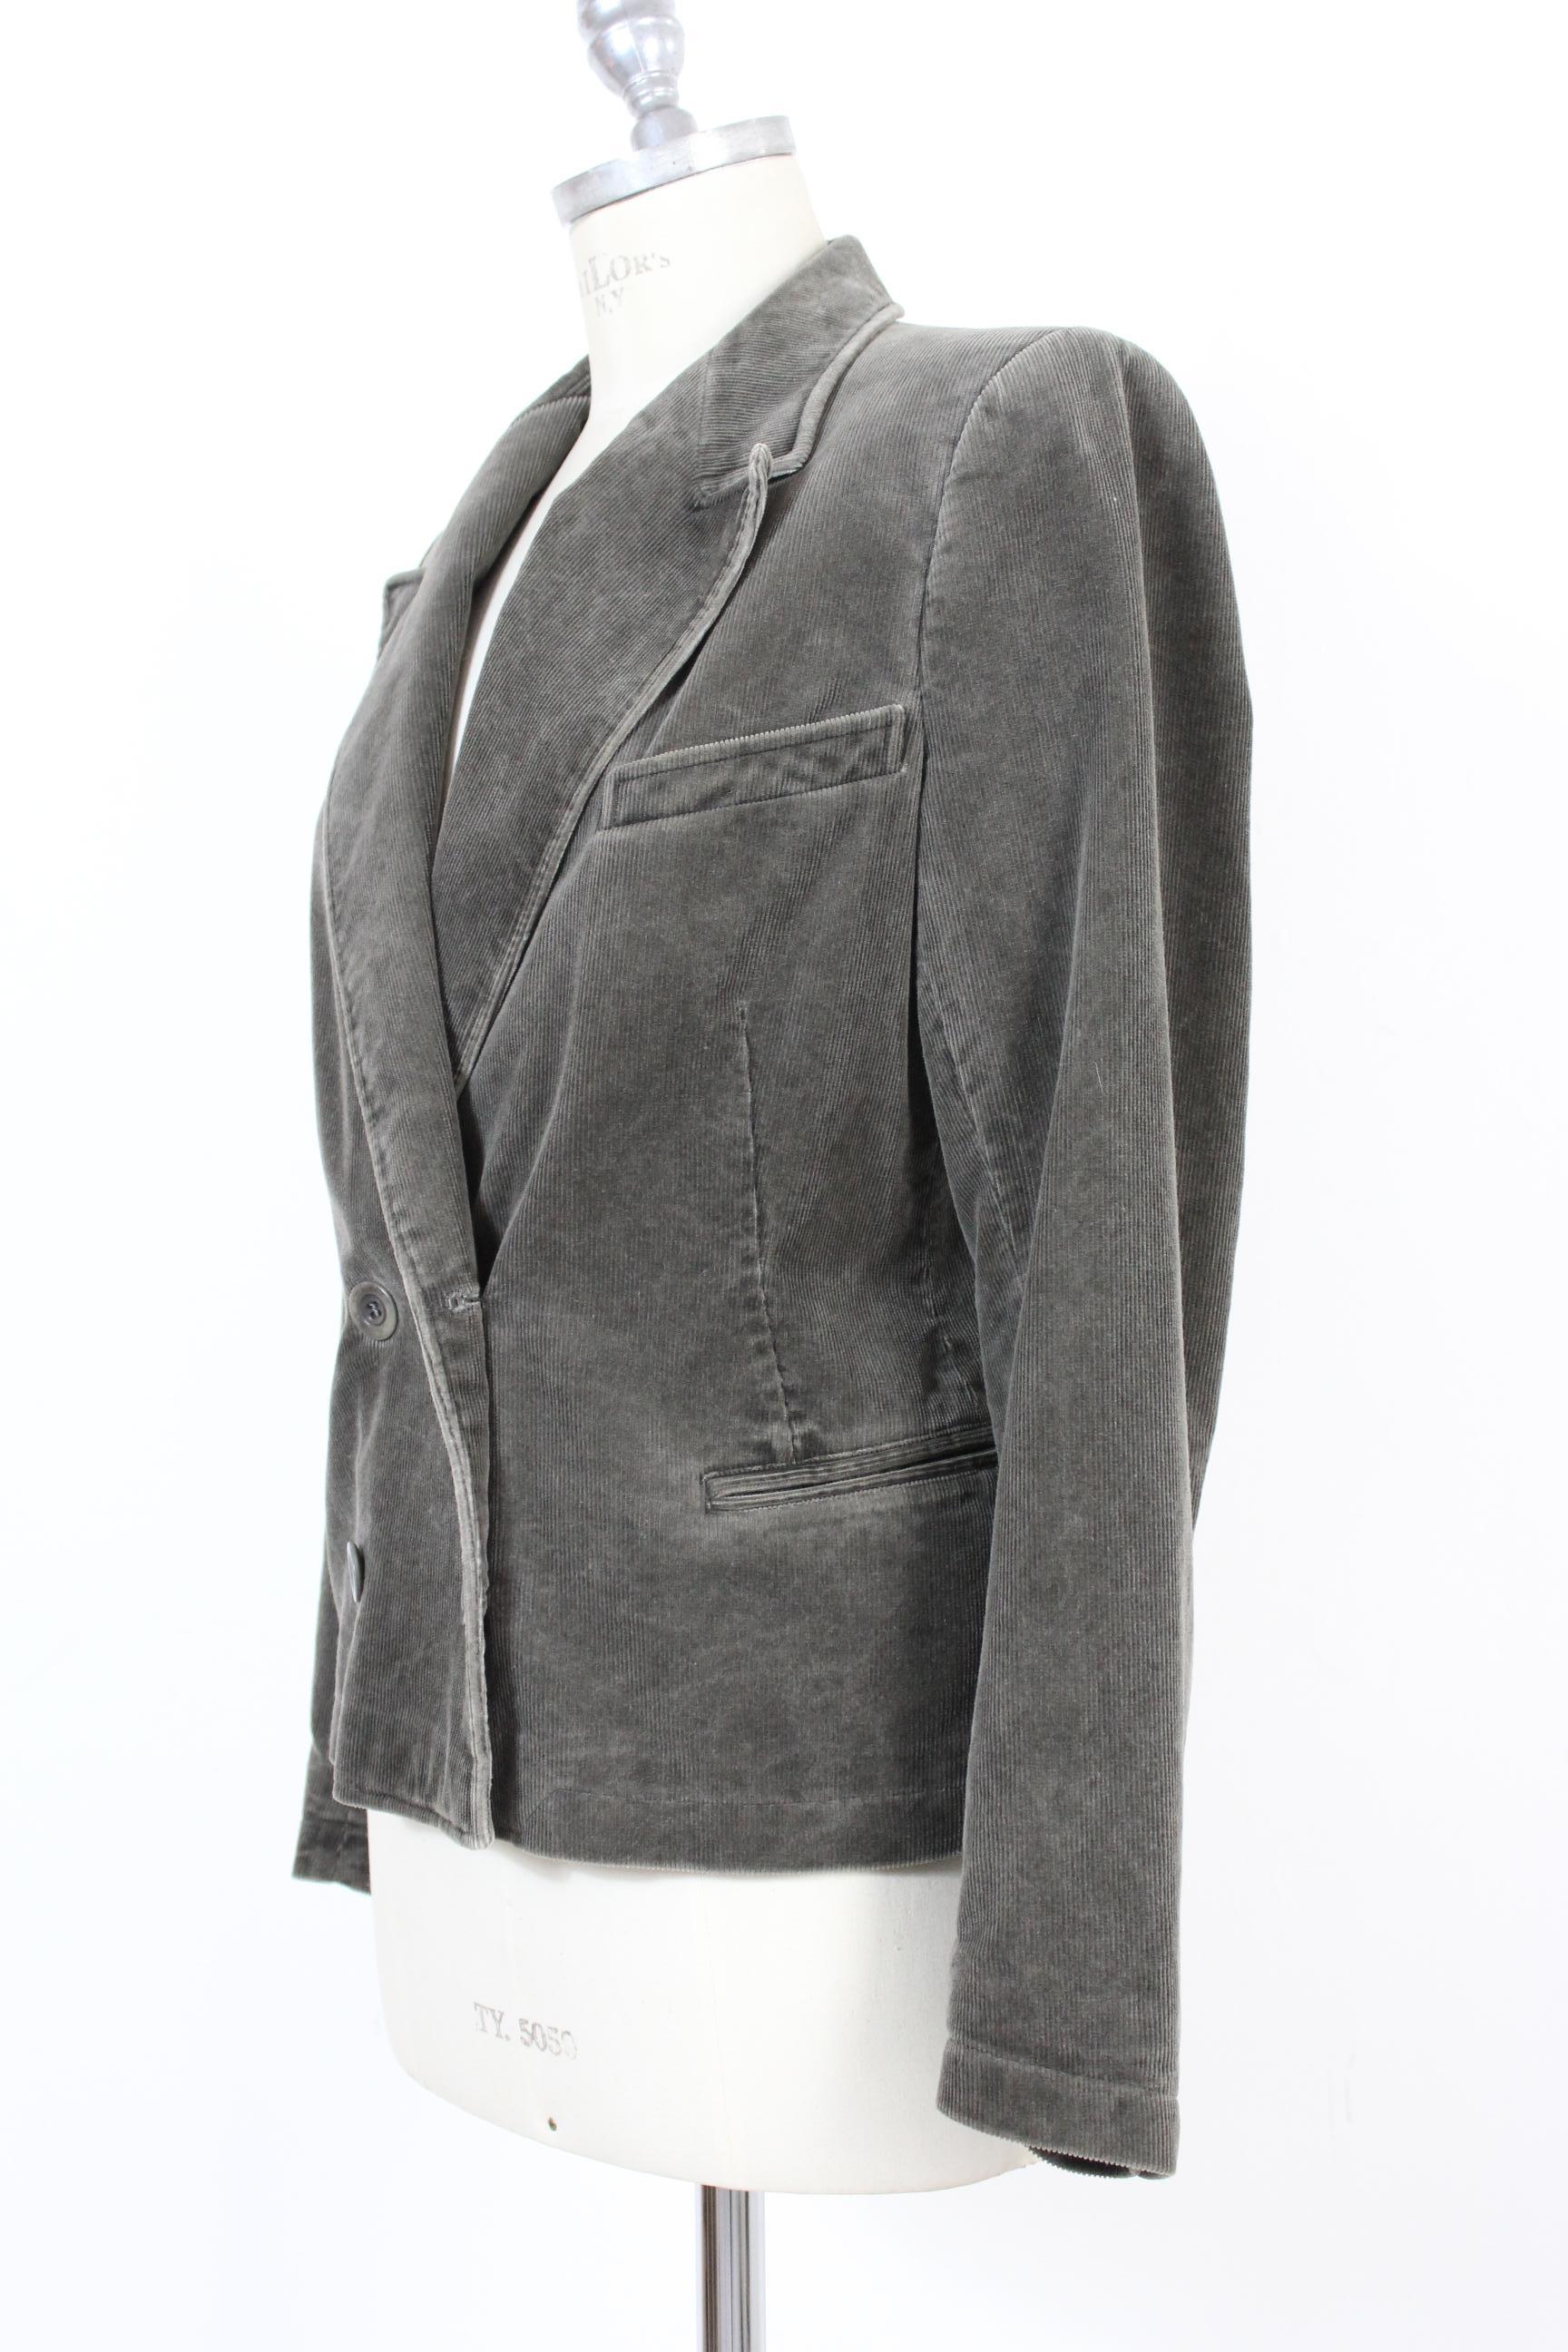 Dries Van Noten Gray Steel Cotton Velvet Jacket Double-Breasted 2000s Flared 1